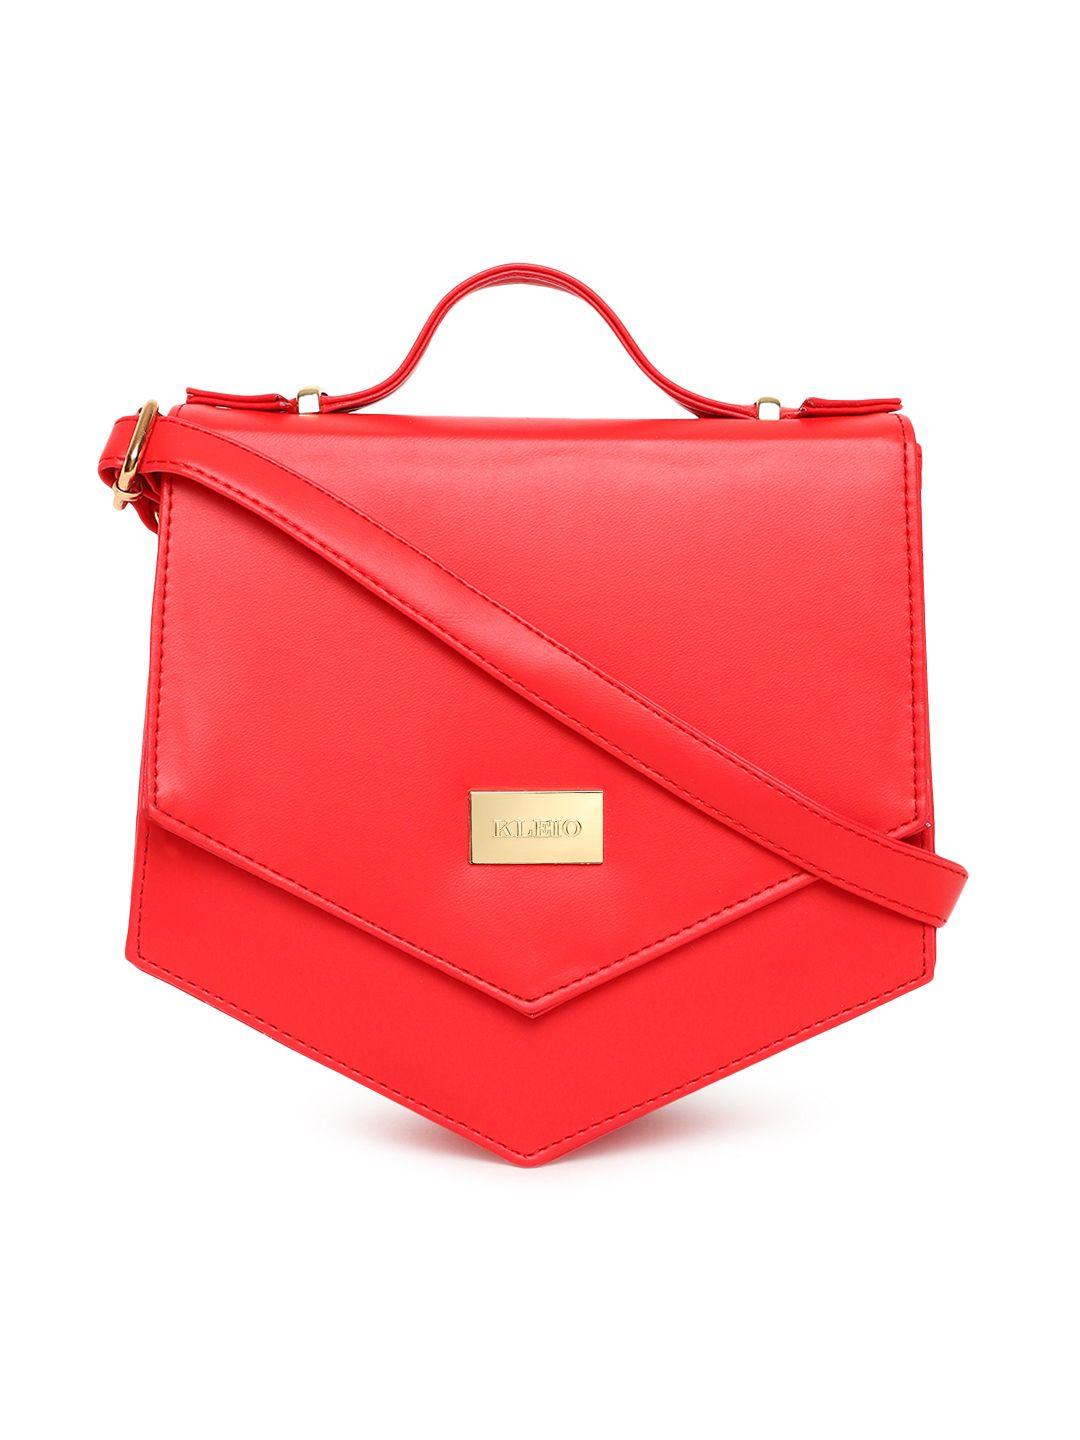 kleio red unique shaped sling bag